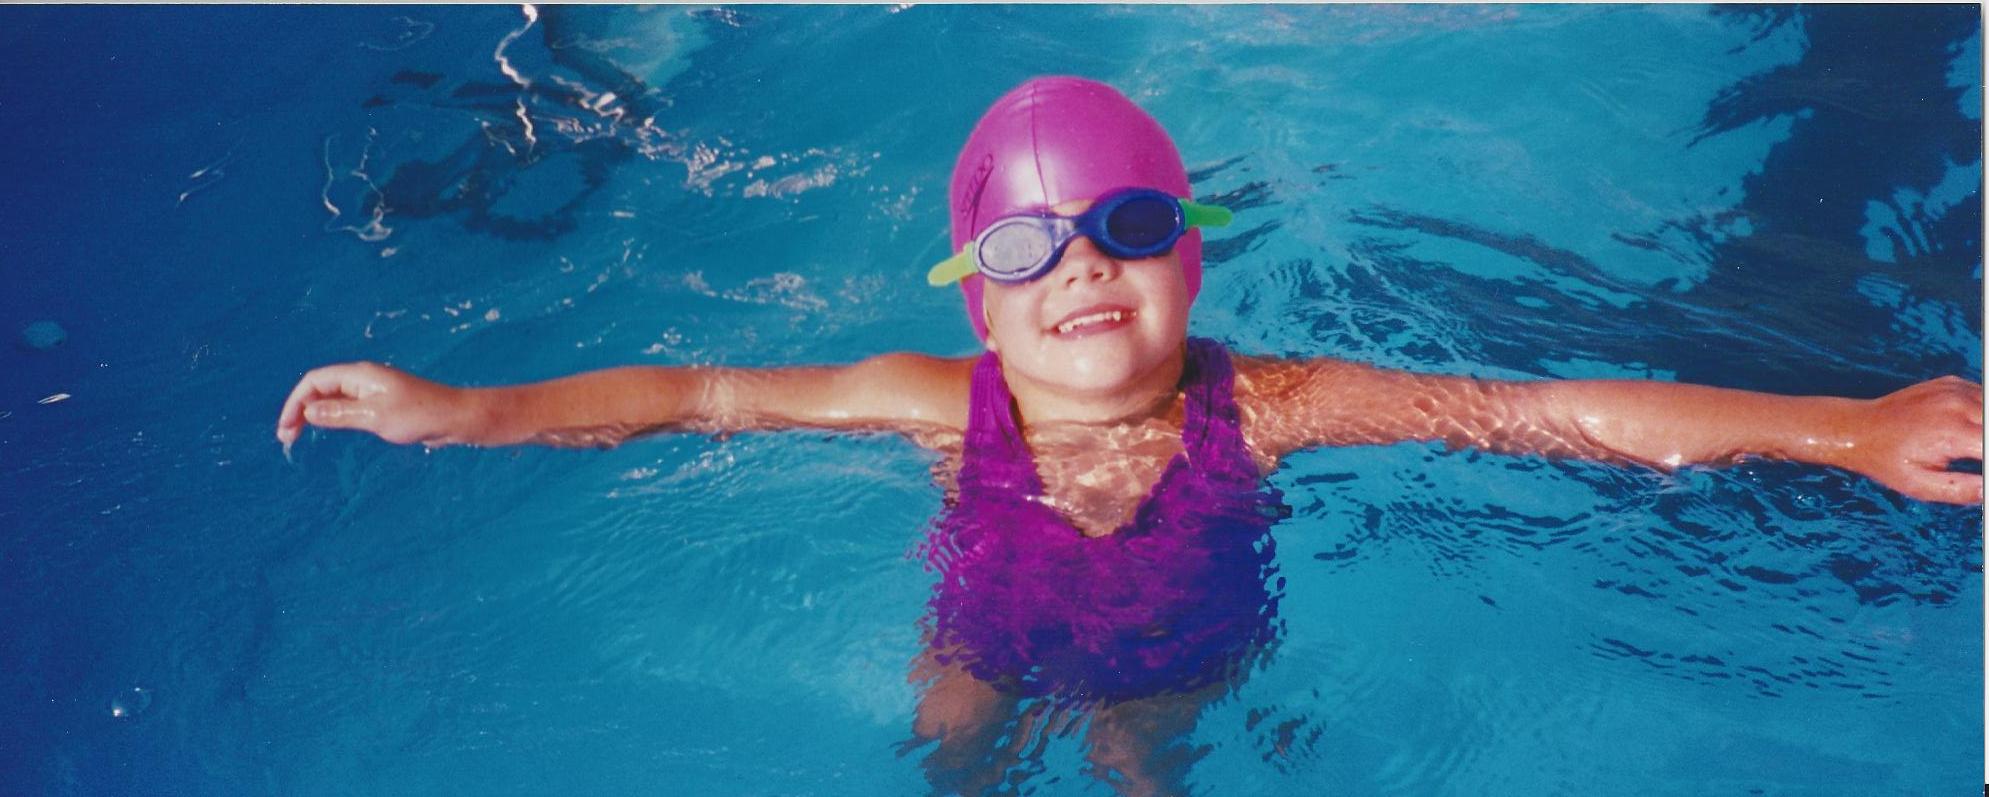 Wingert as a child swimmer.